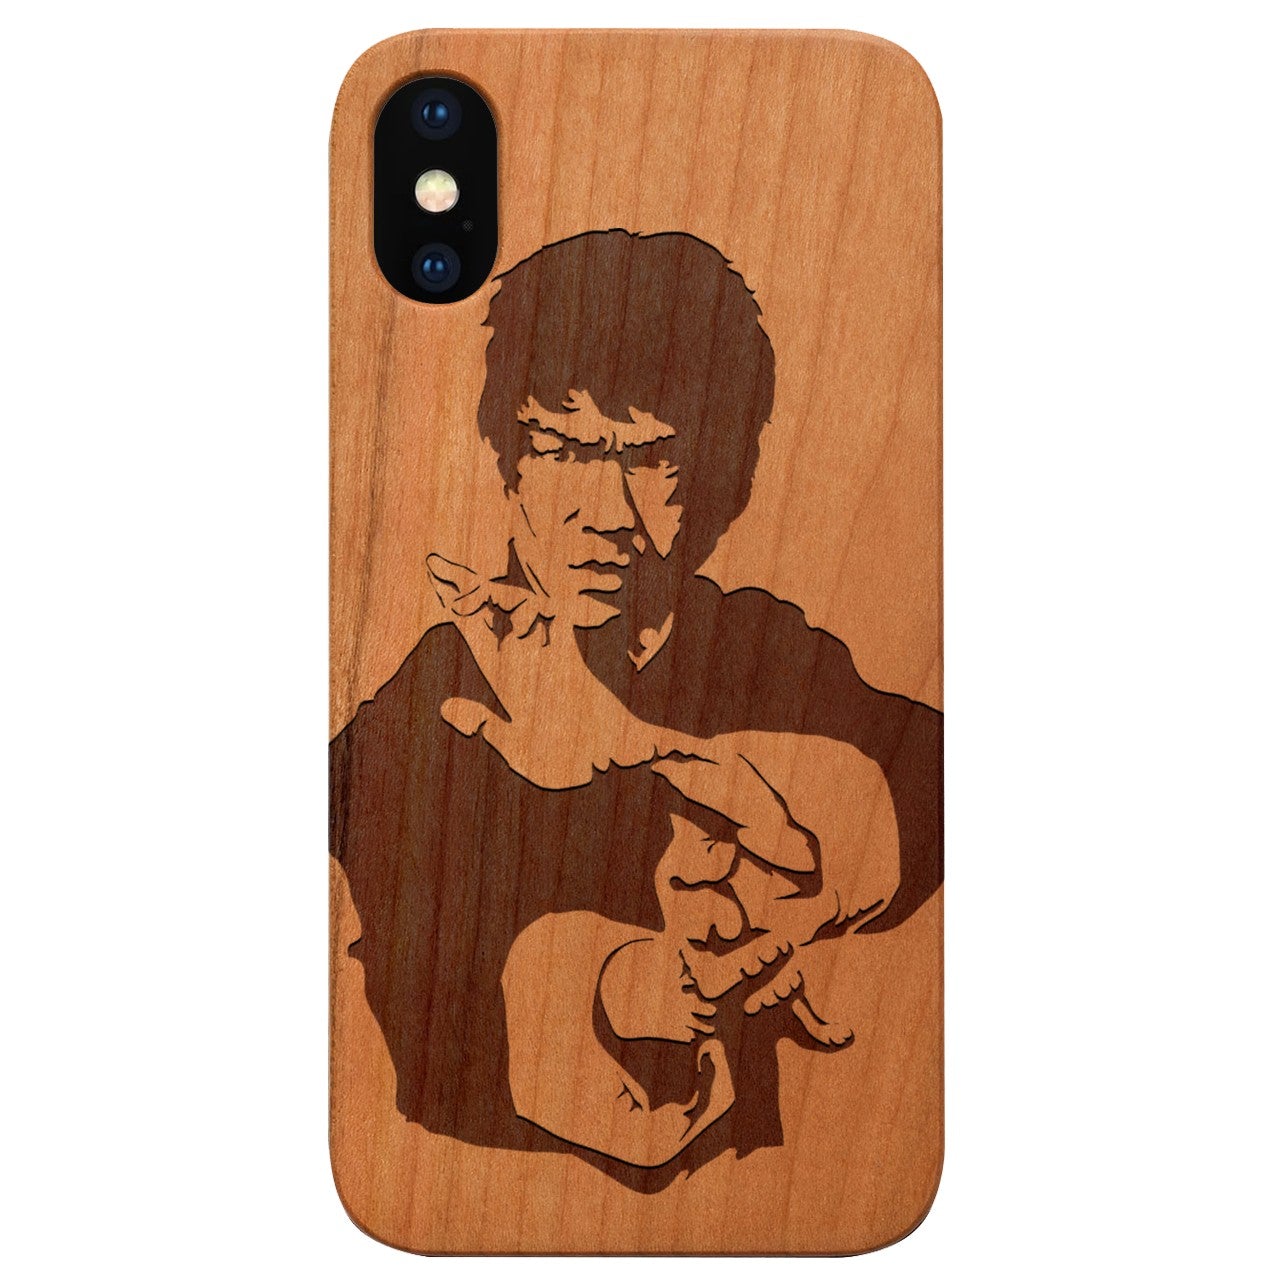  Bruce Lee - Engraved - Wooden Phone Case - IPhone 13 Models